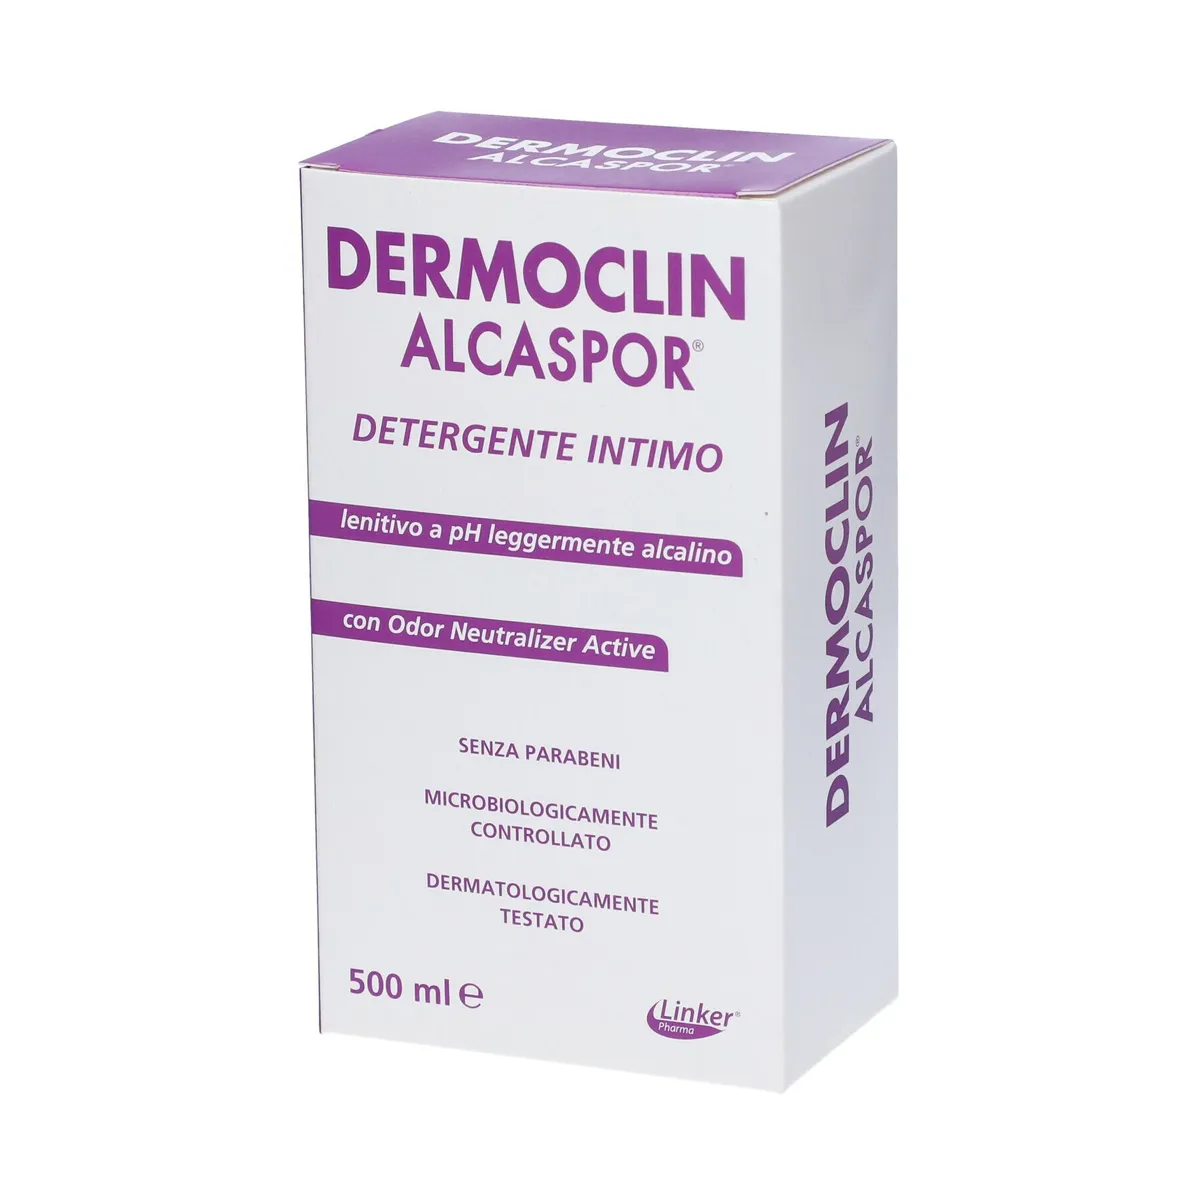 Dermoclin Alcaspor Detergente Intimo Lenitivo 500ml